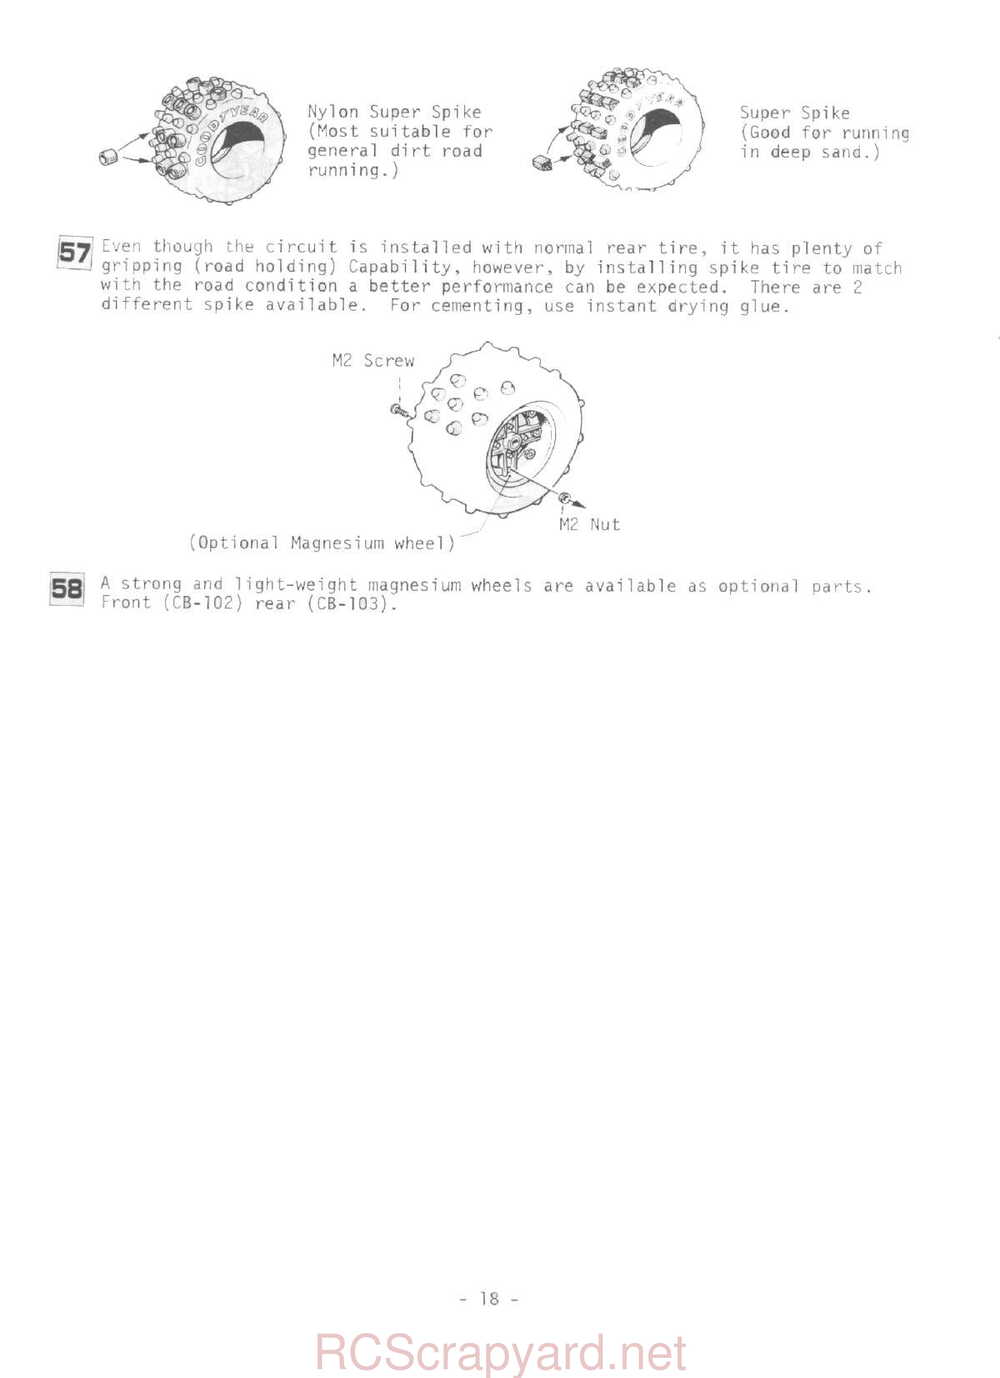 Kyosho - 3047 - Circuit-20-Extra - Rowdy-Baja - Manual - Page 18